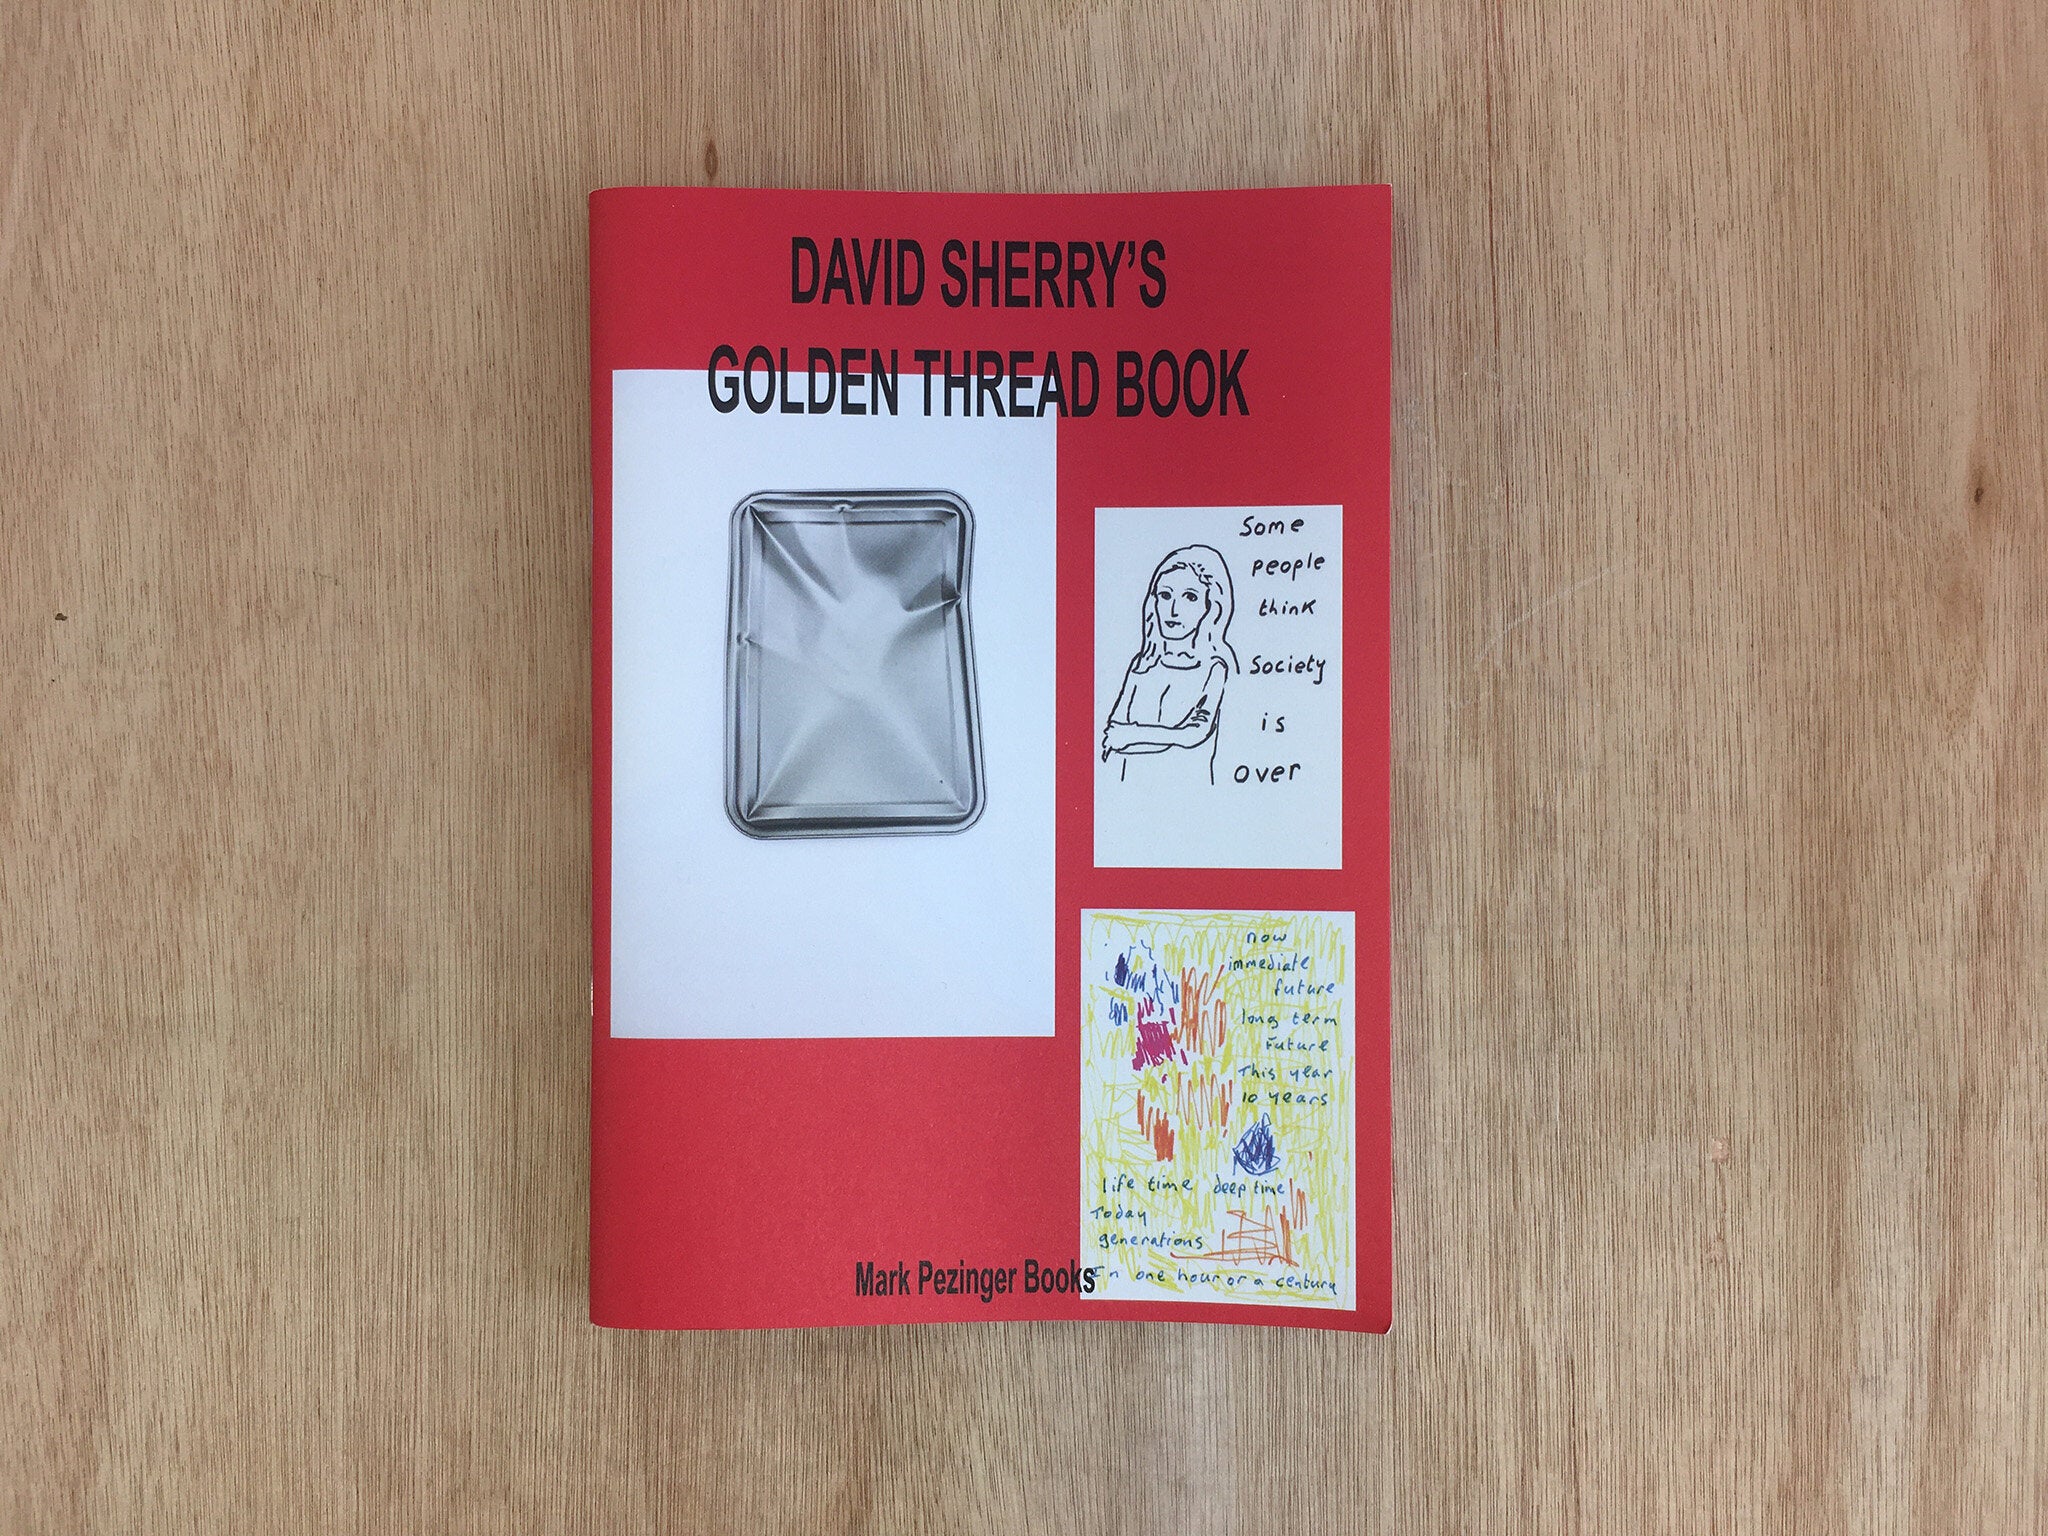 DAVID SHERRY'S GOLDEN THREAD BOOK by David Sherry